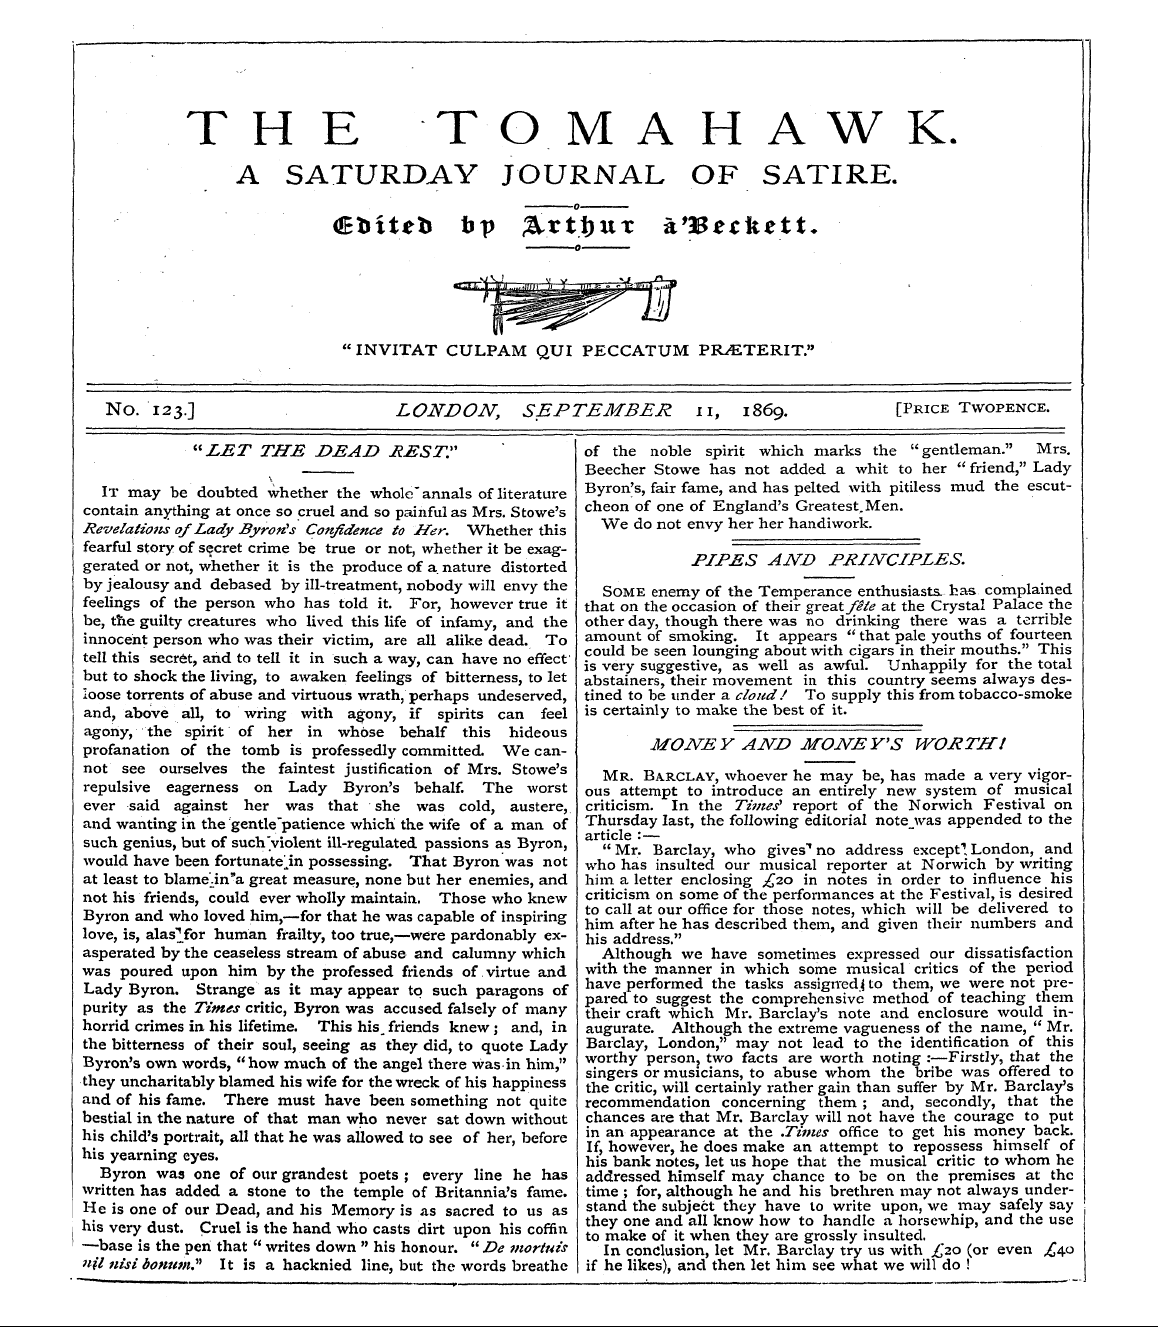 Tomahawk (1867-1870): jS F Y, 1st edition - "Let The Dead Rest"